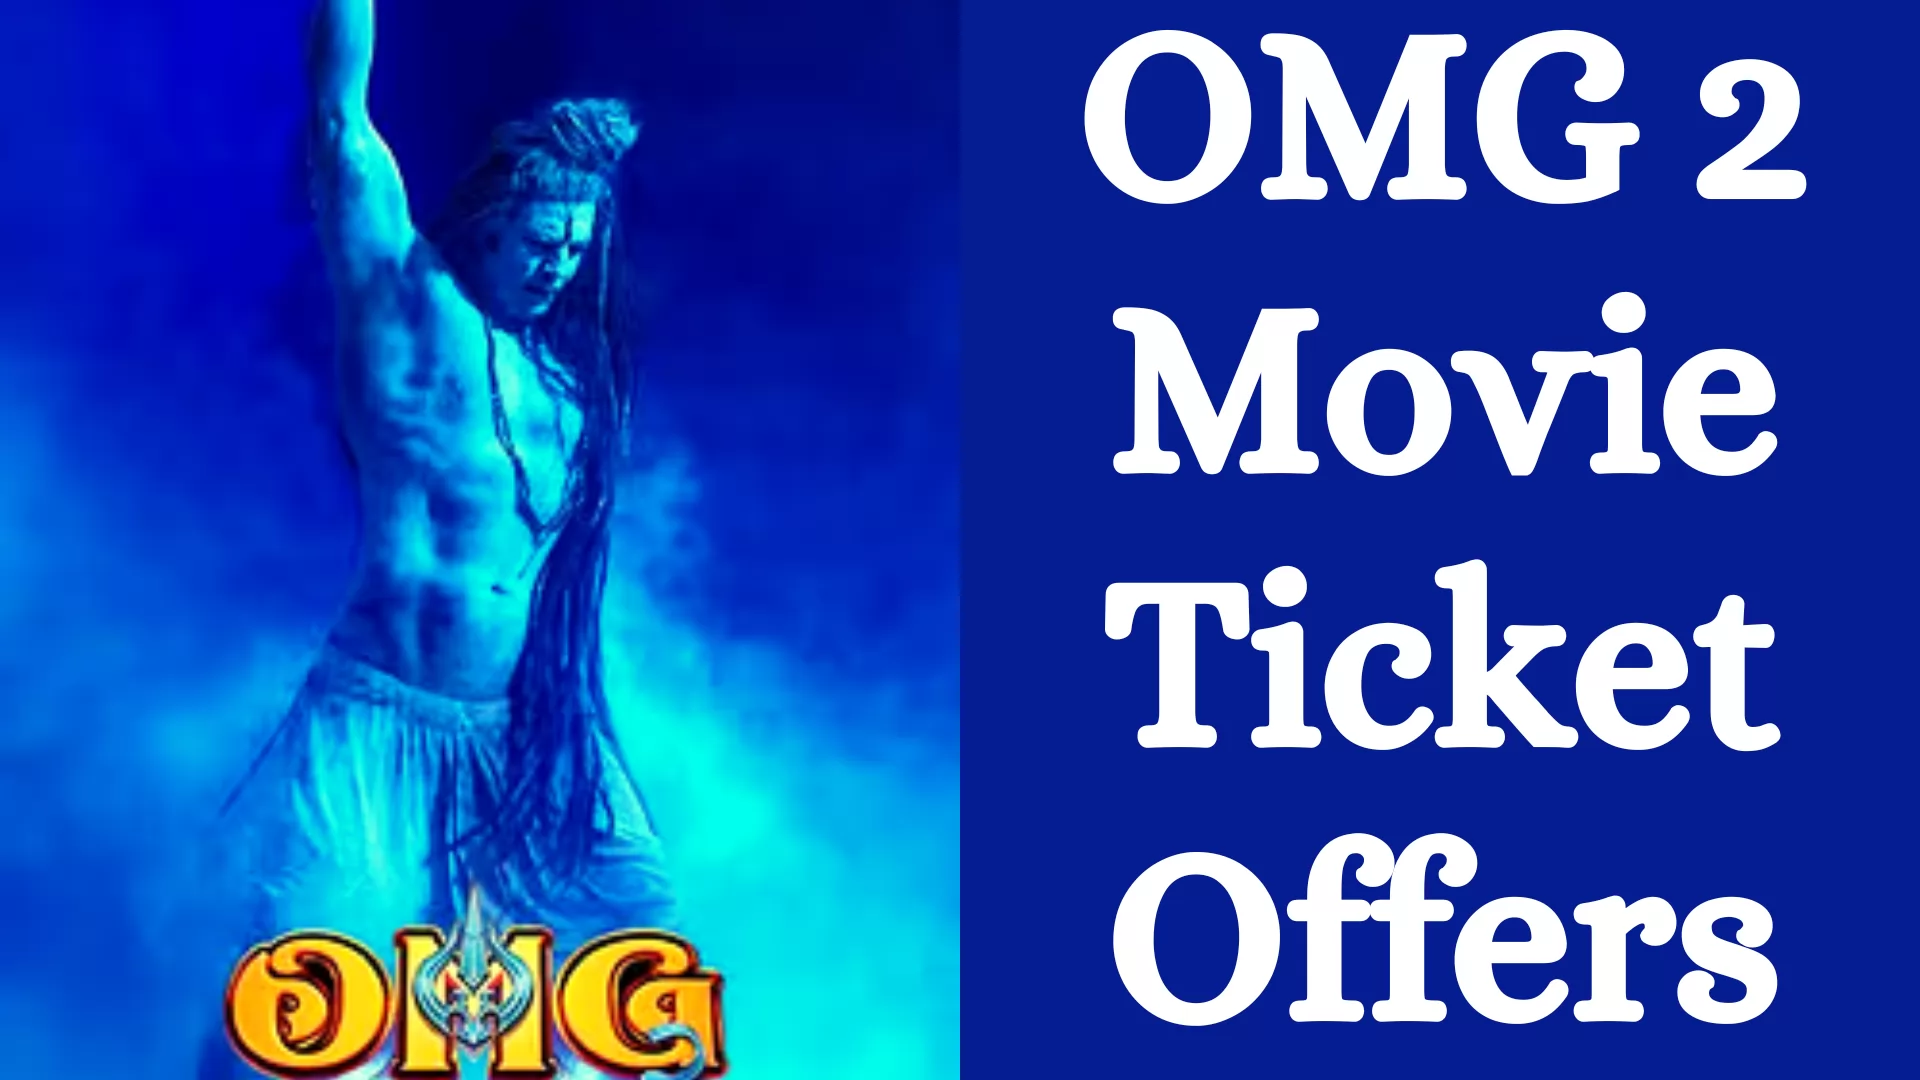 OMG 2 Movie Ticket Offers